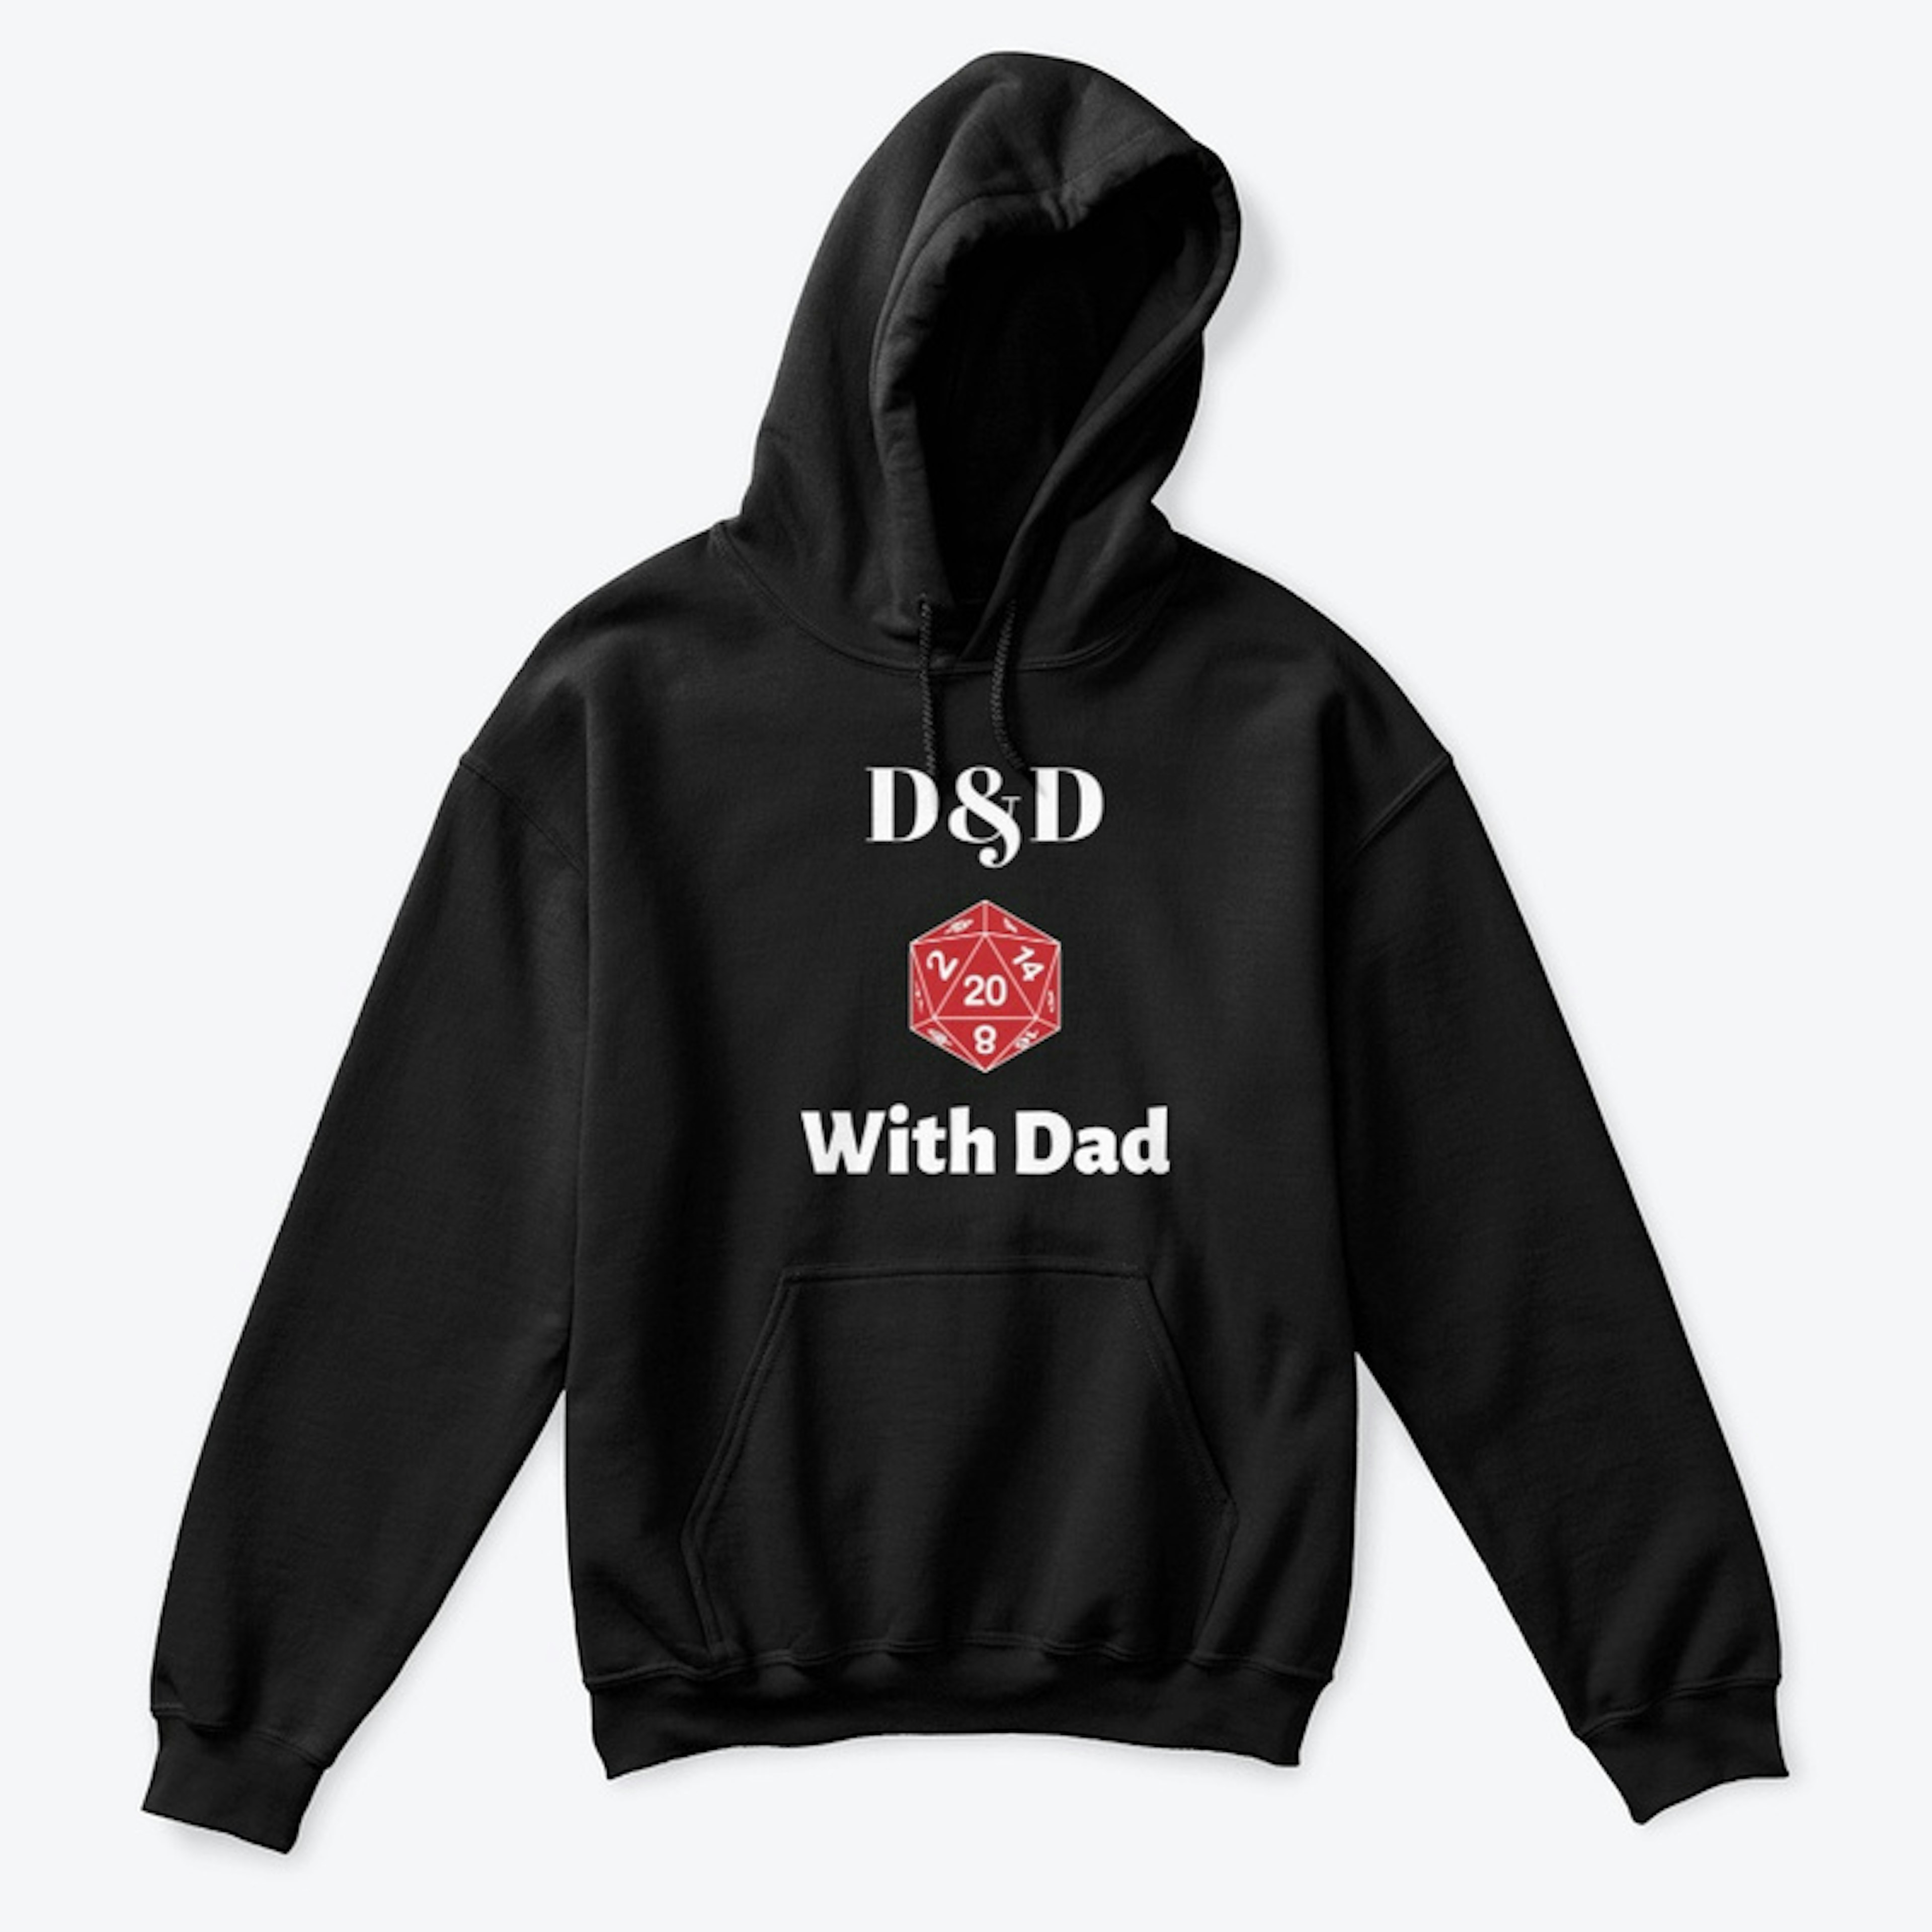 D&D With Dad Merchandise